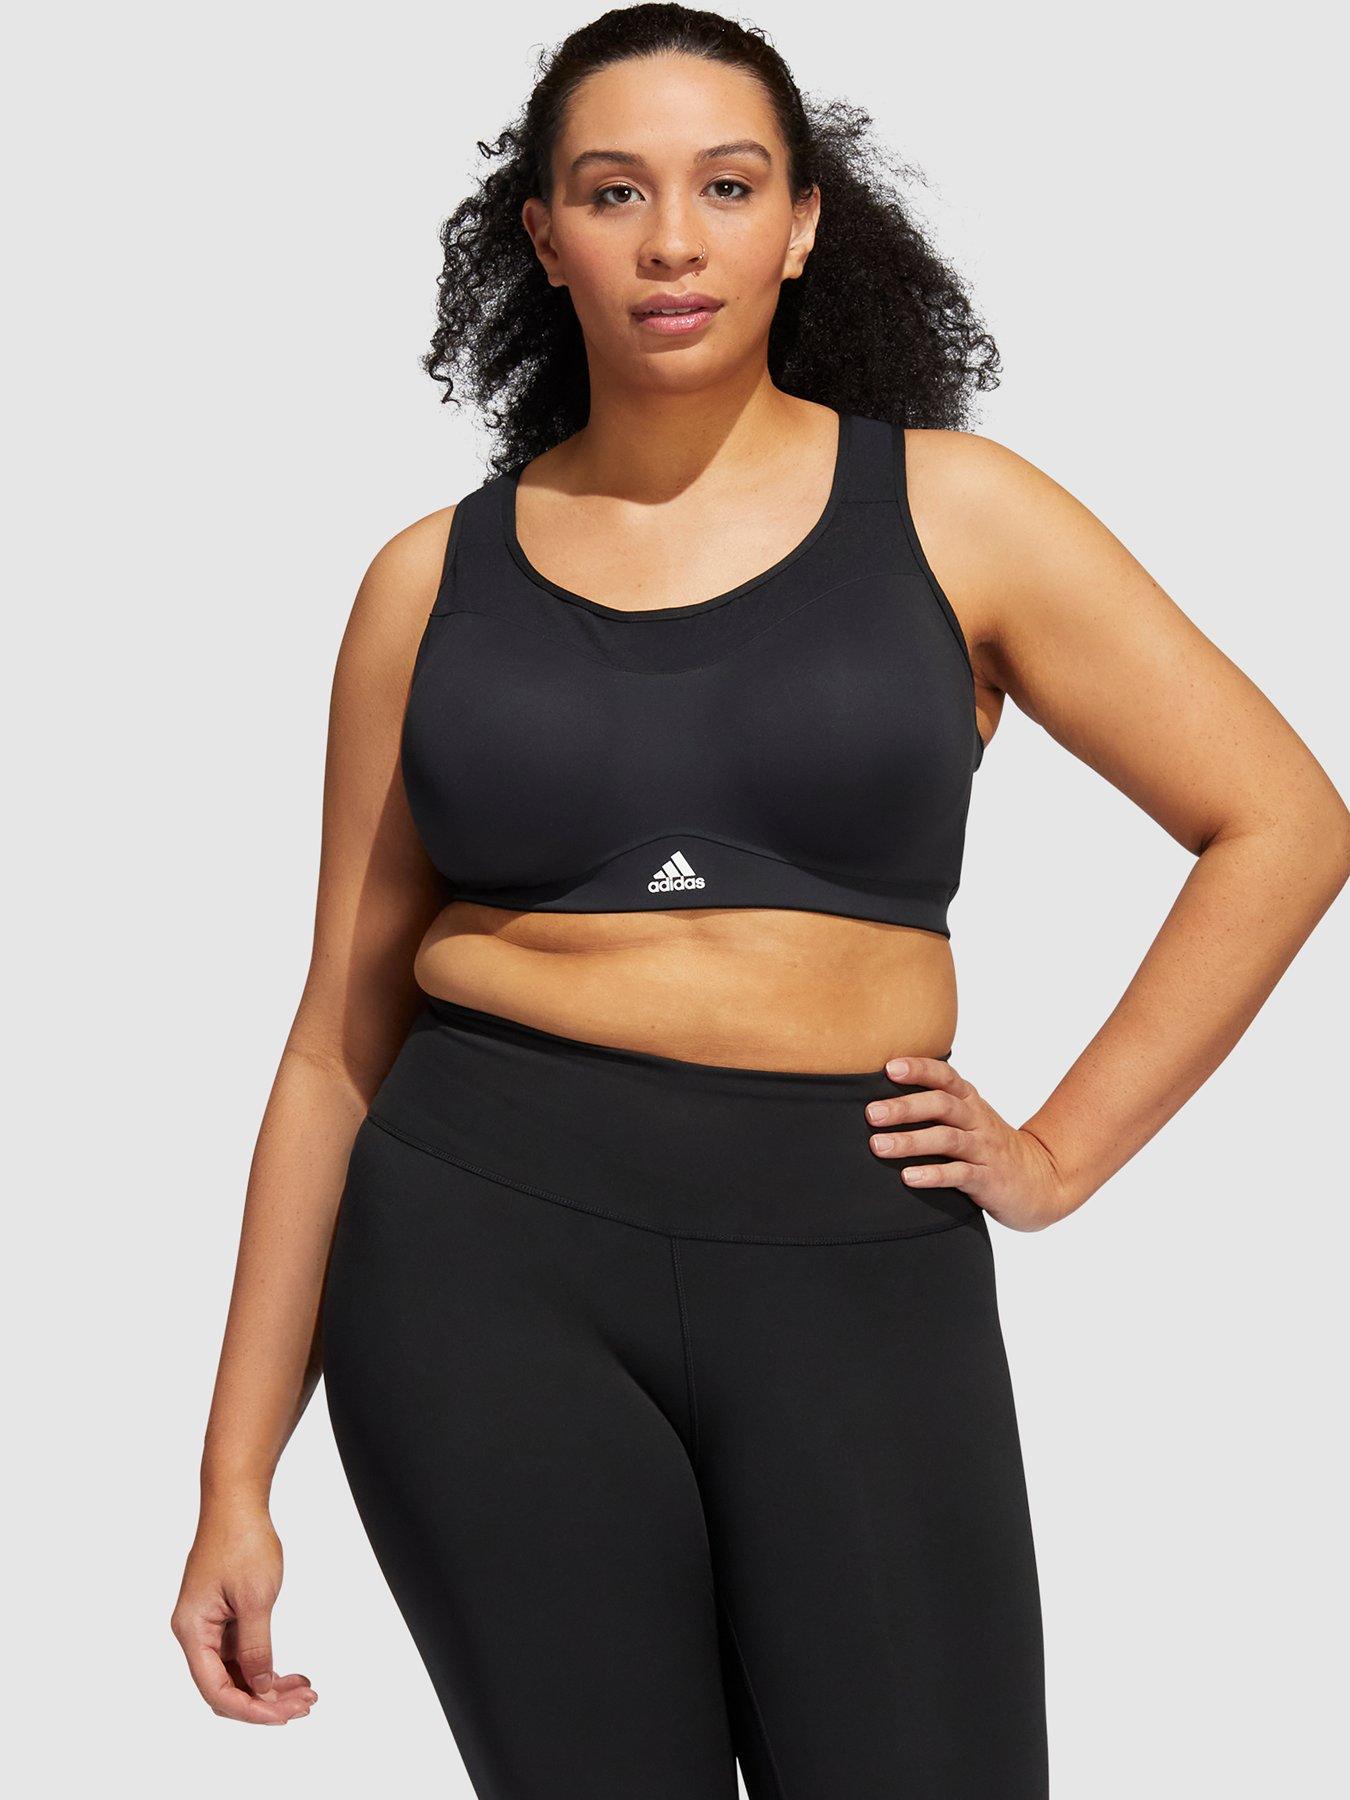 adidas Women's Training Workout Sports Bra High Support - Plus Size - Black/White